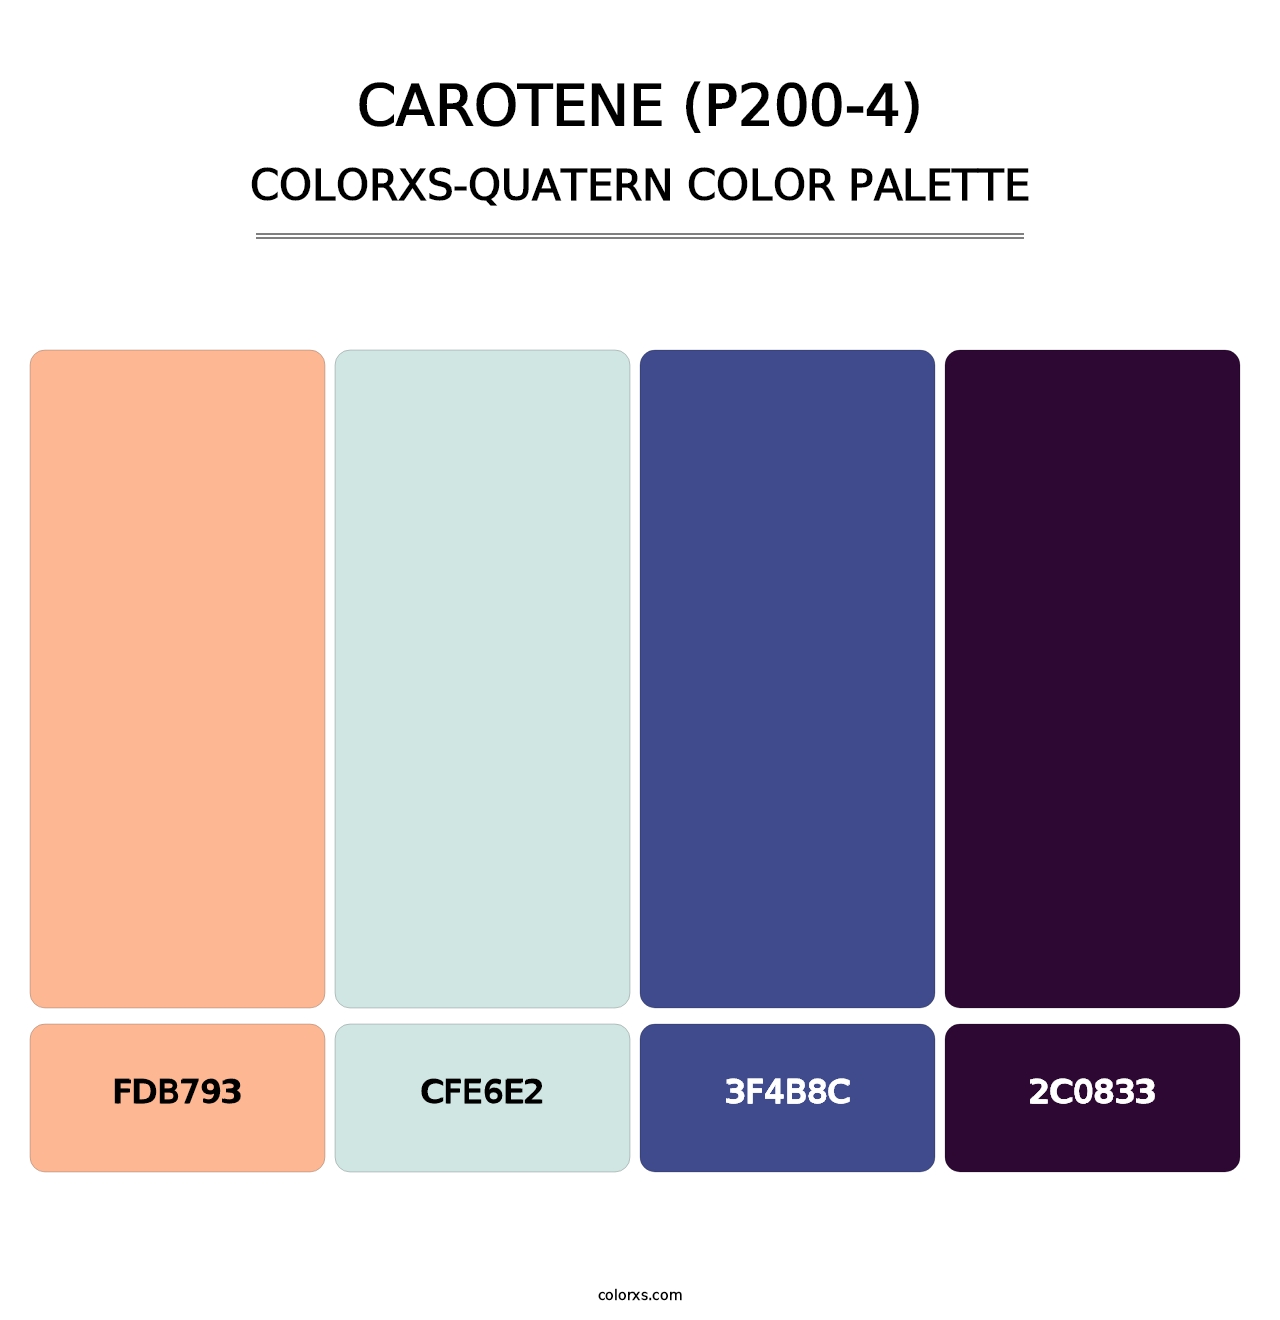 Carotene (P200-4) - Colorxs Quatern Palette